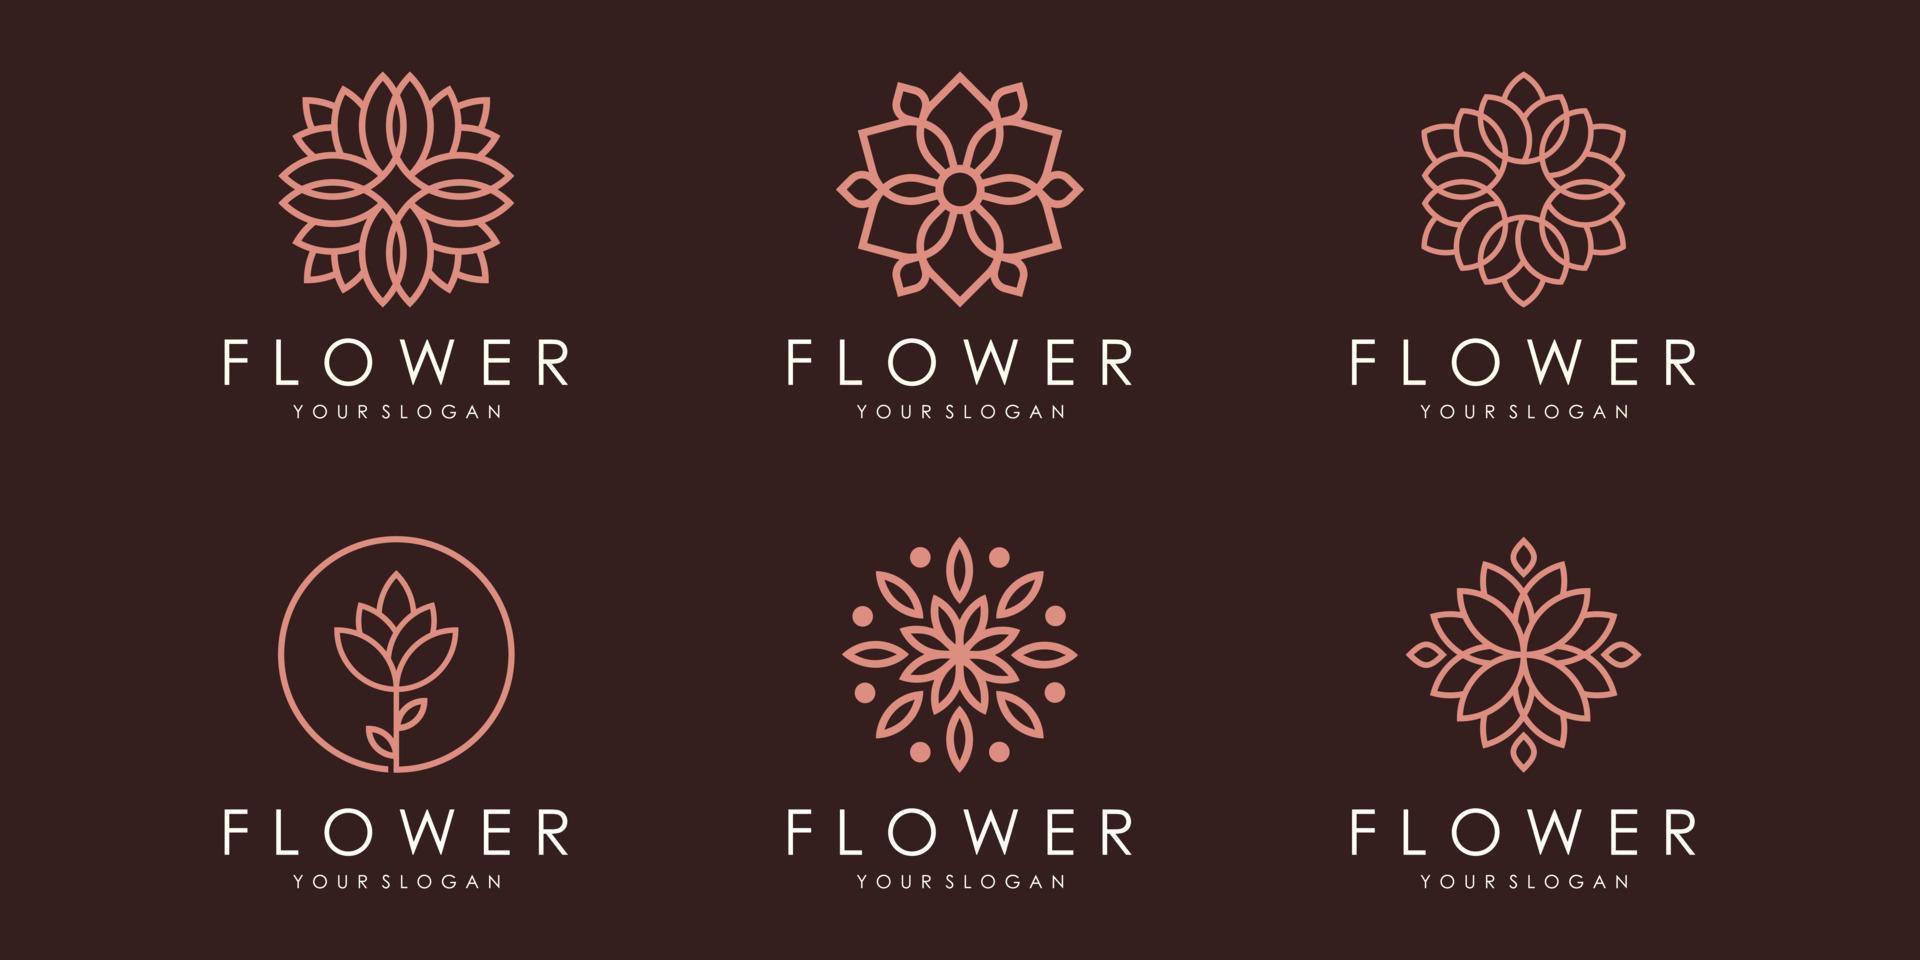 logotipo de ornamento floral e conjunto de ícones. vetor de modelo de design.